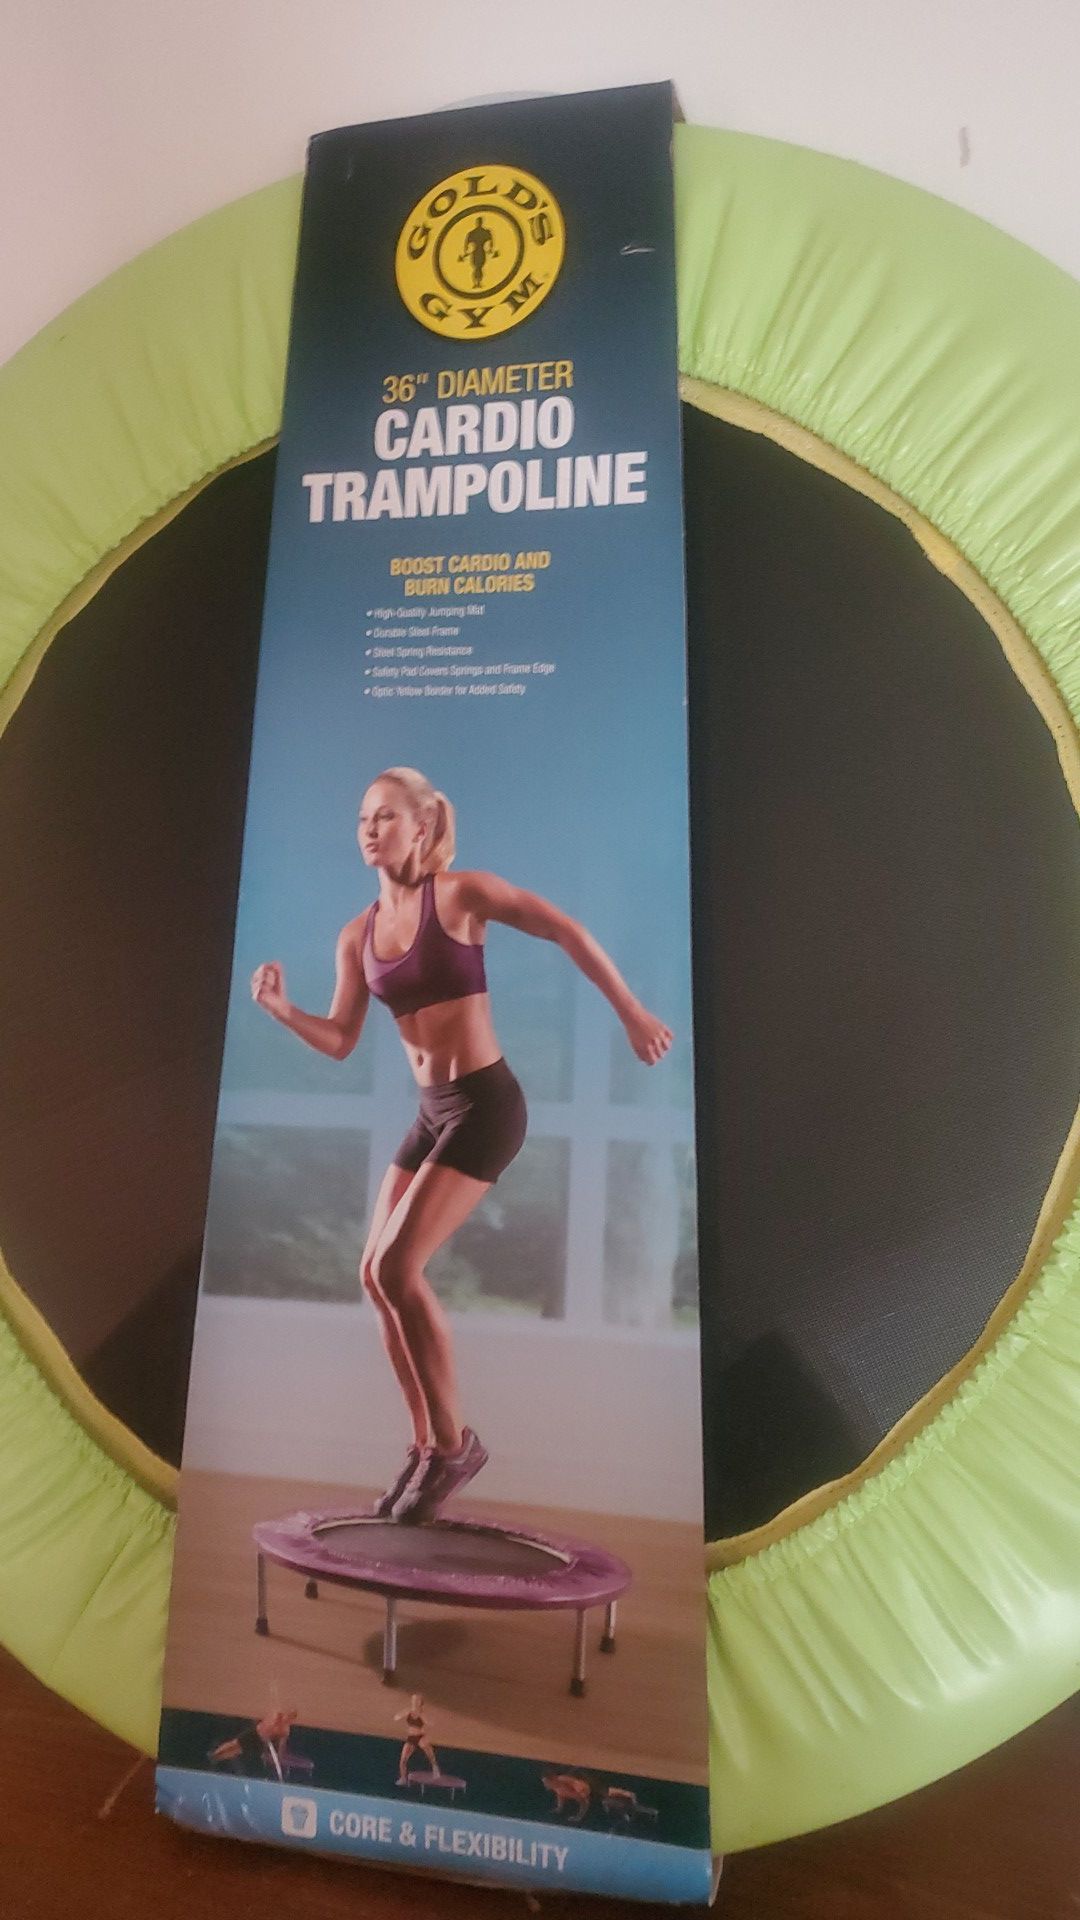 Cardio trampoline